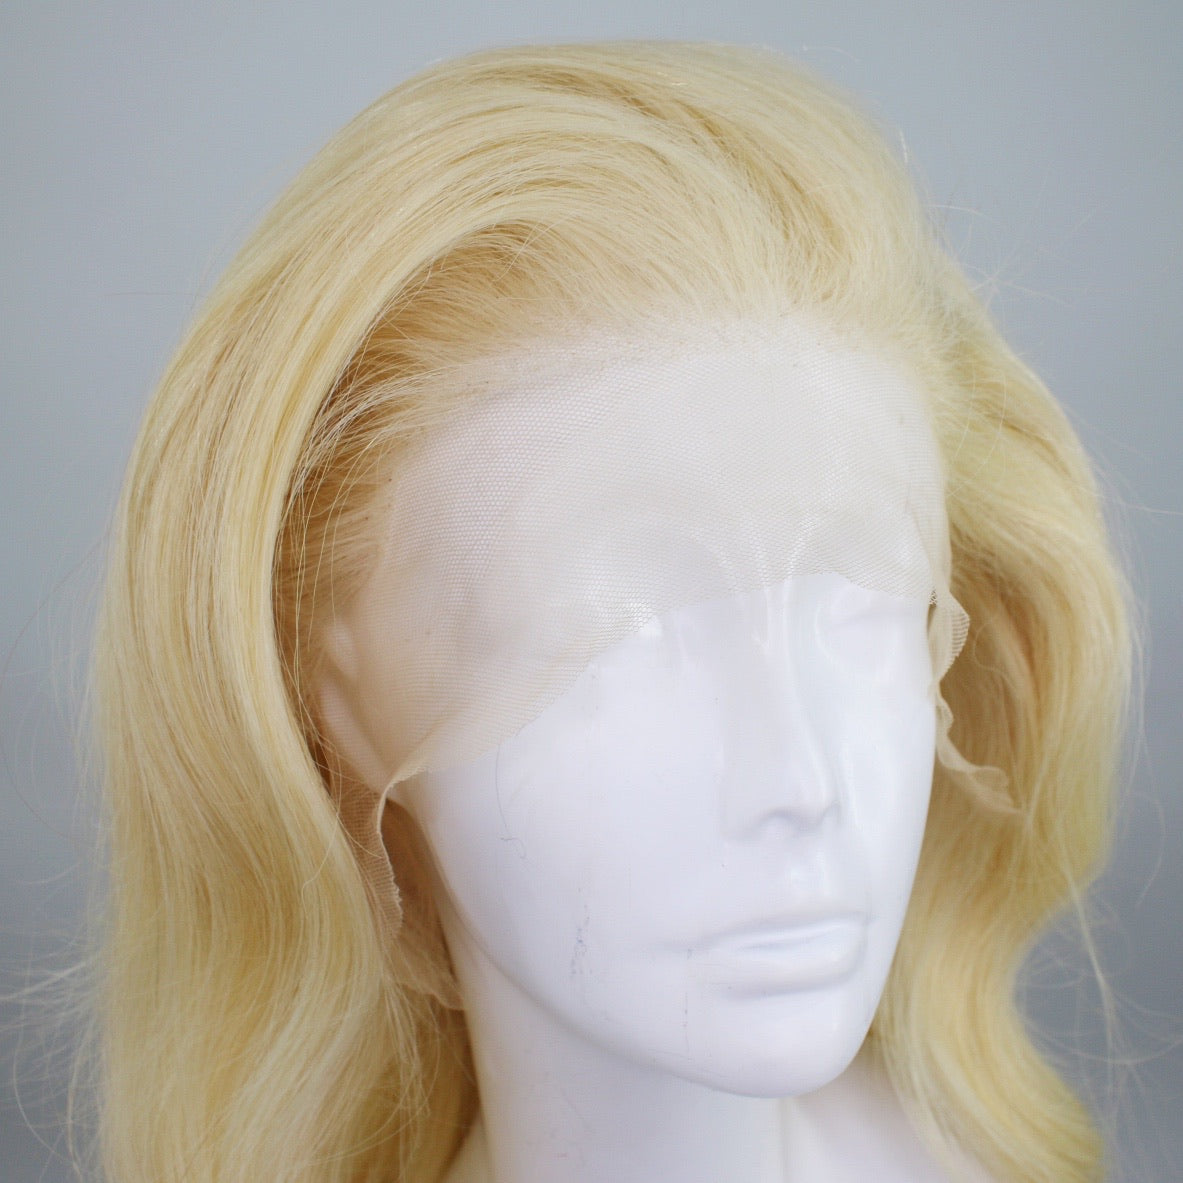 Ash White Platinum Blonde Human Hair Lace Front Wig